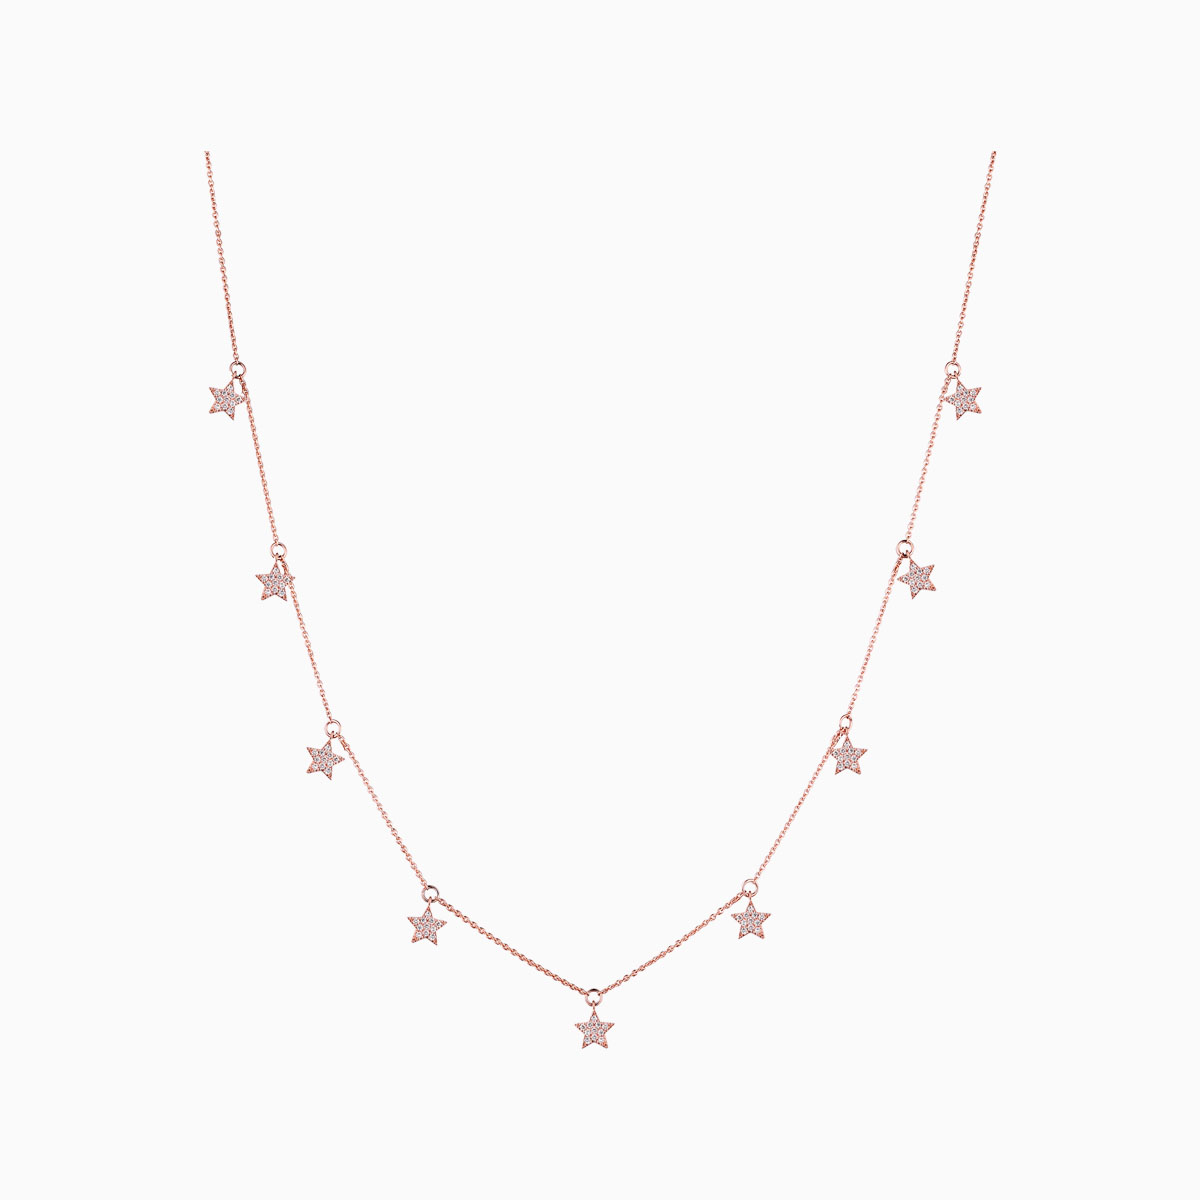 NL25533WHT- 14K Rose Gold Diamond Necklace, 0.63 TCW